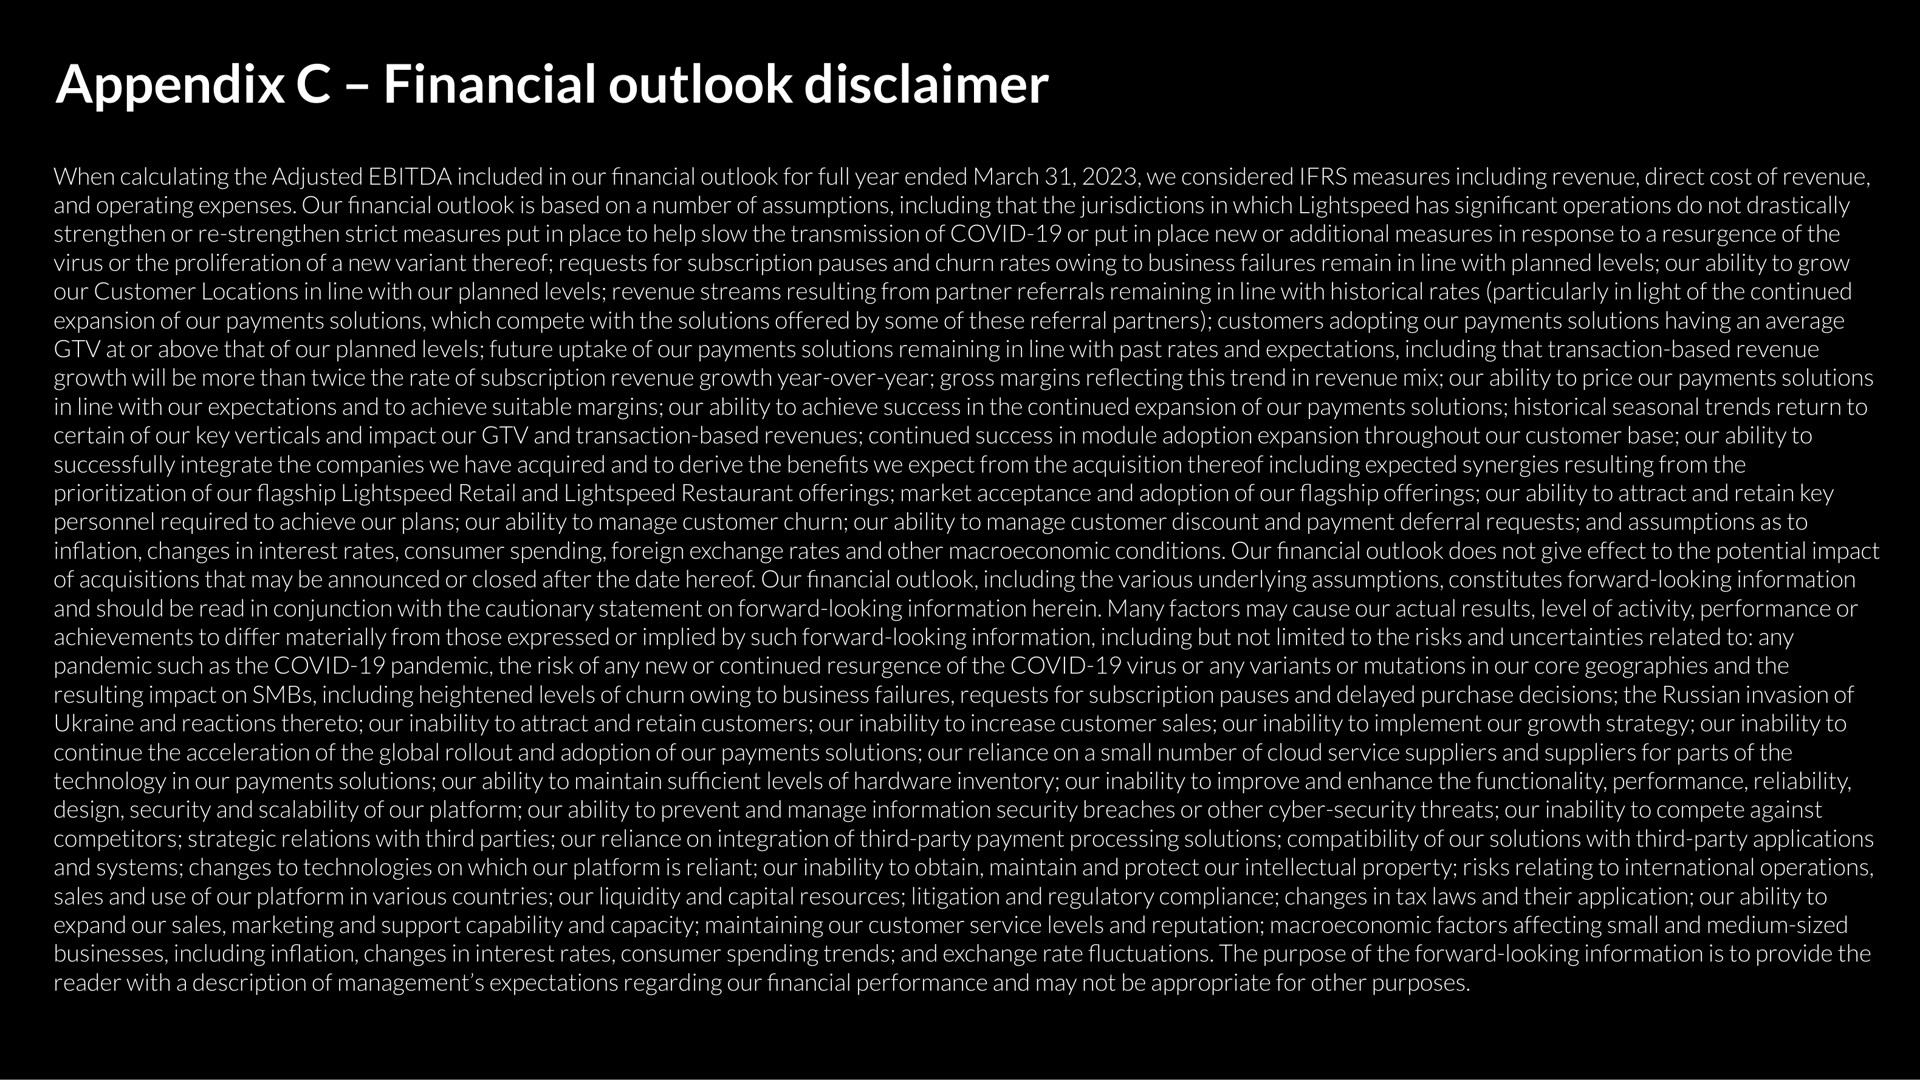 appendix financial outlook disclaimer | Lightspeed